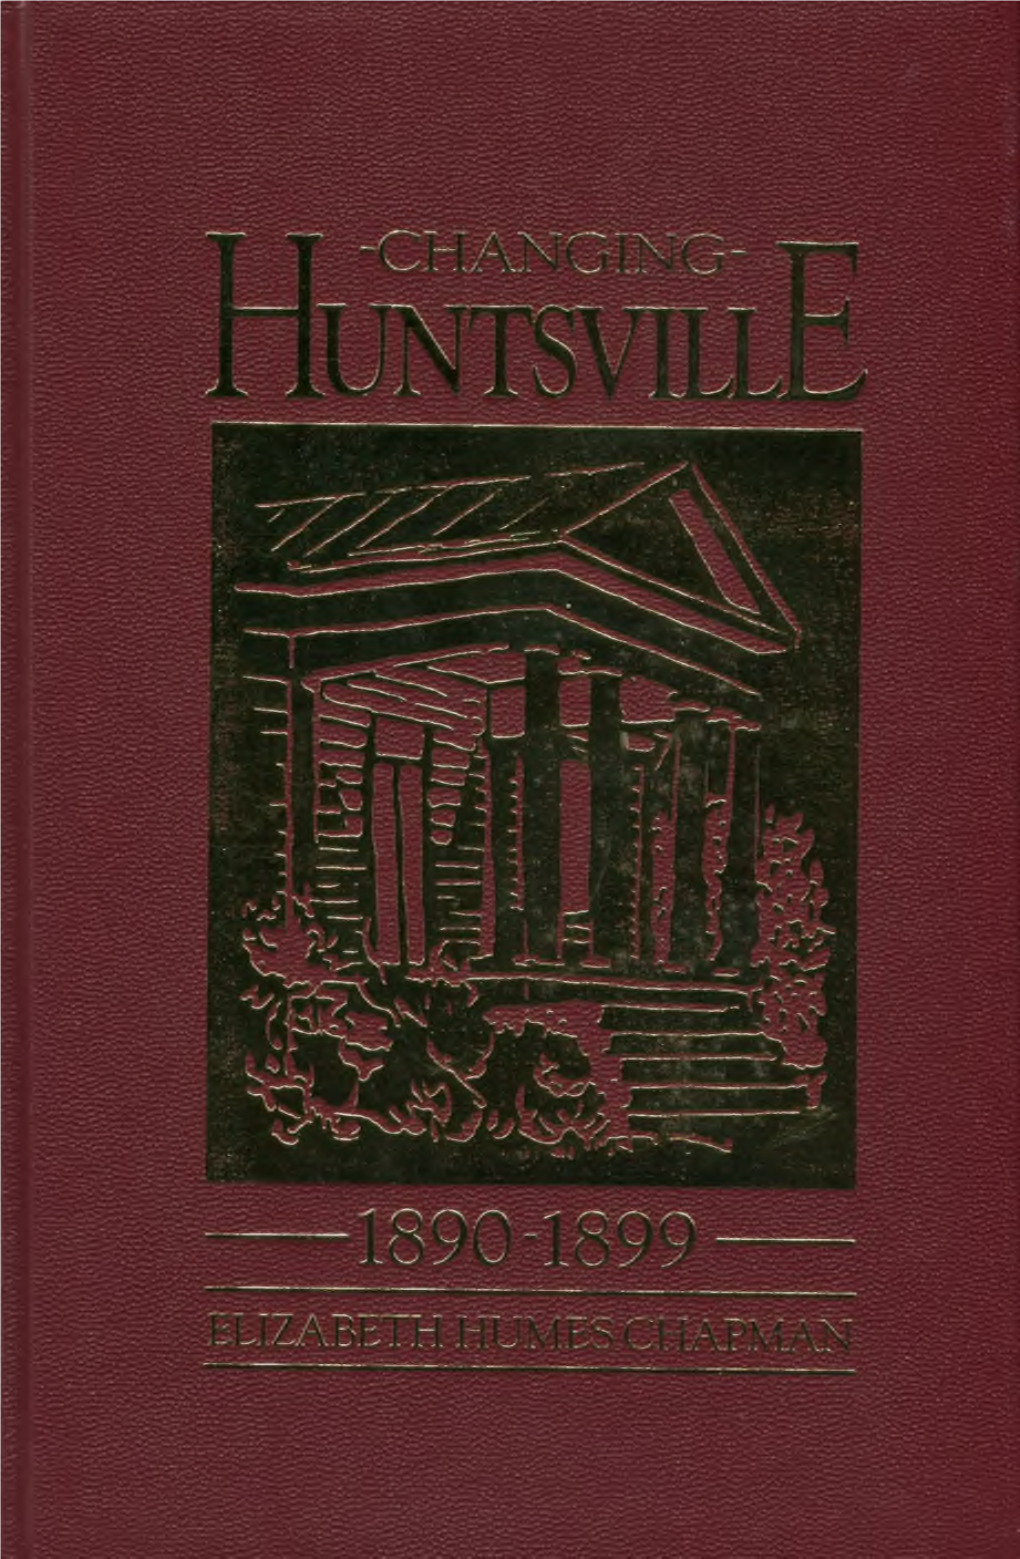 Changing Huntsville, 1890-1899